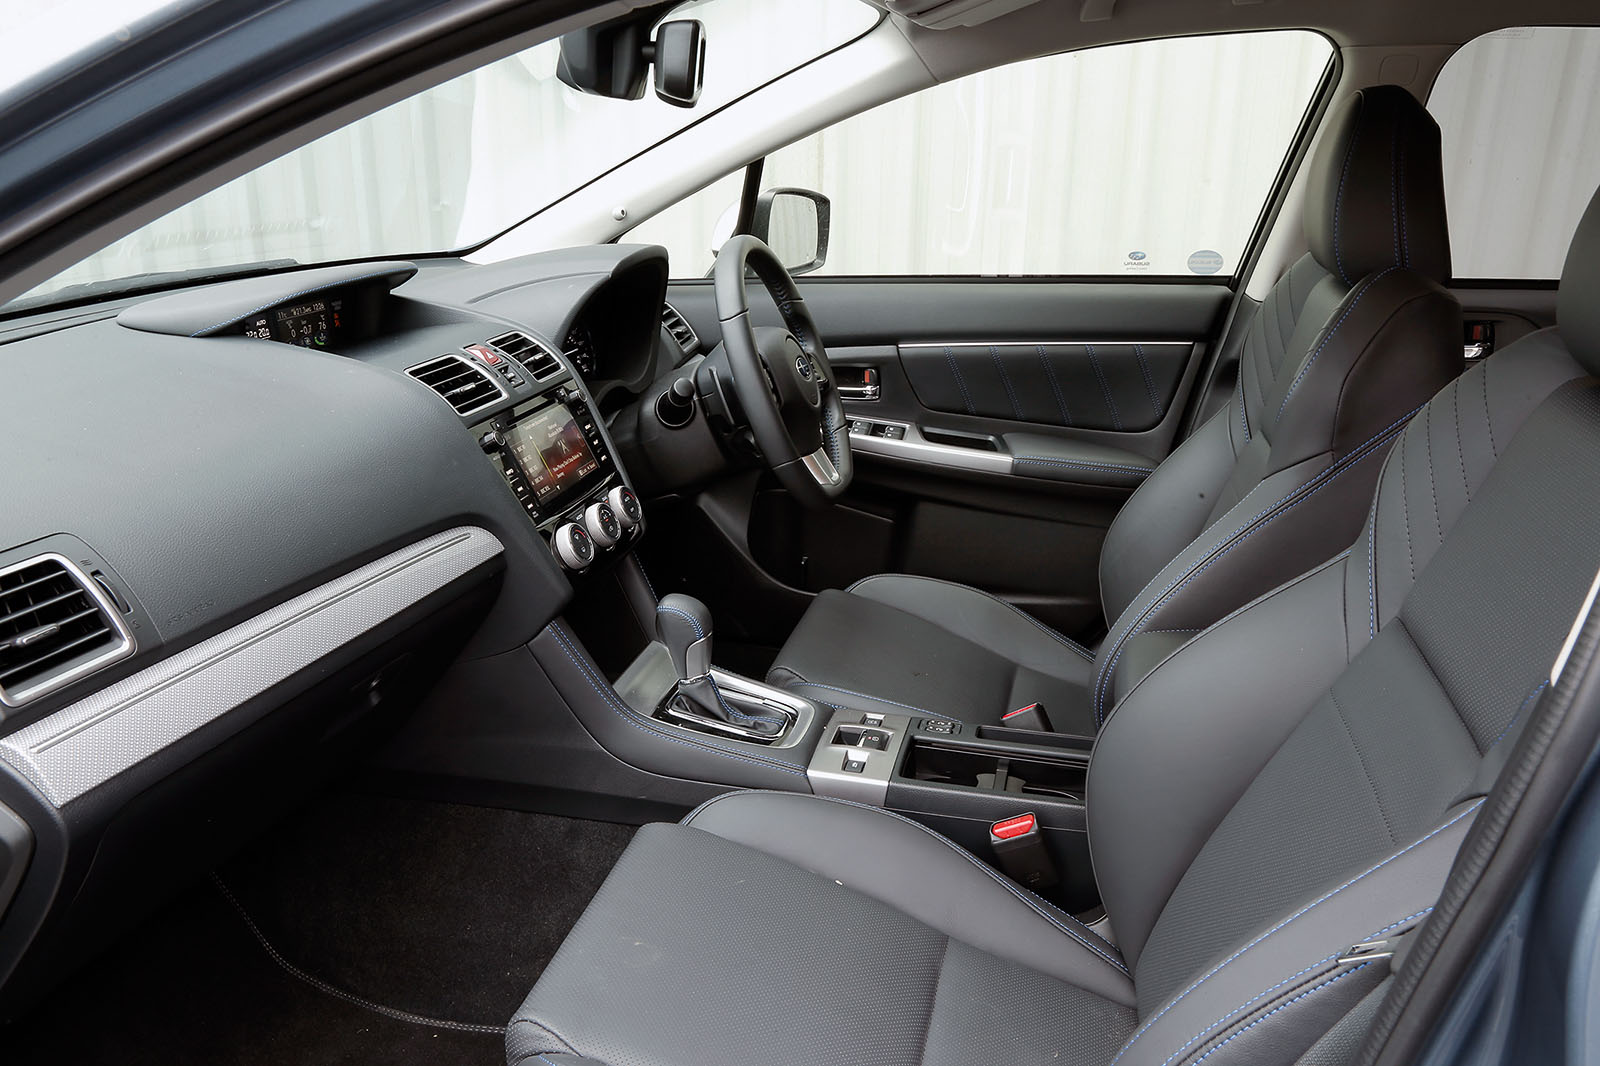 Inside the cabin of the Subaru Levorg